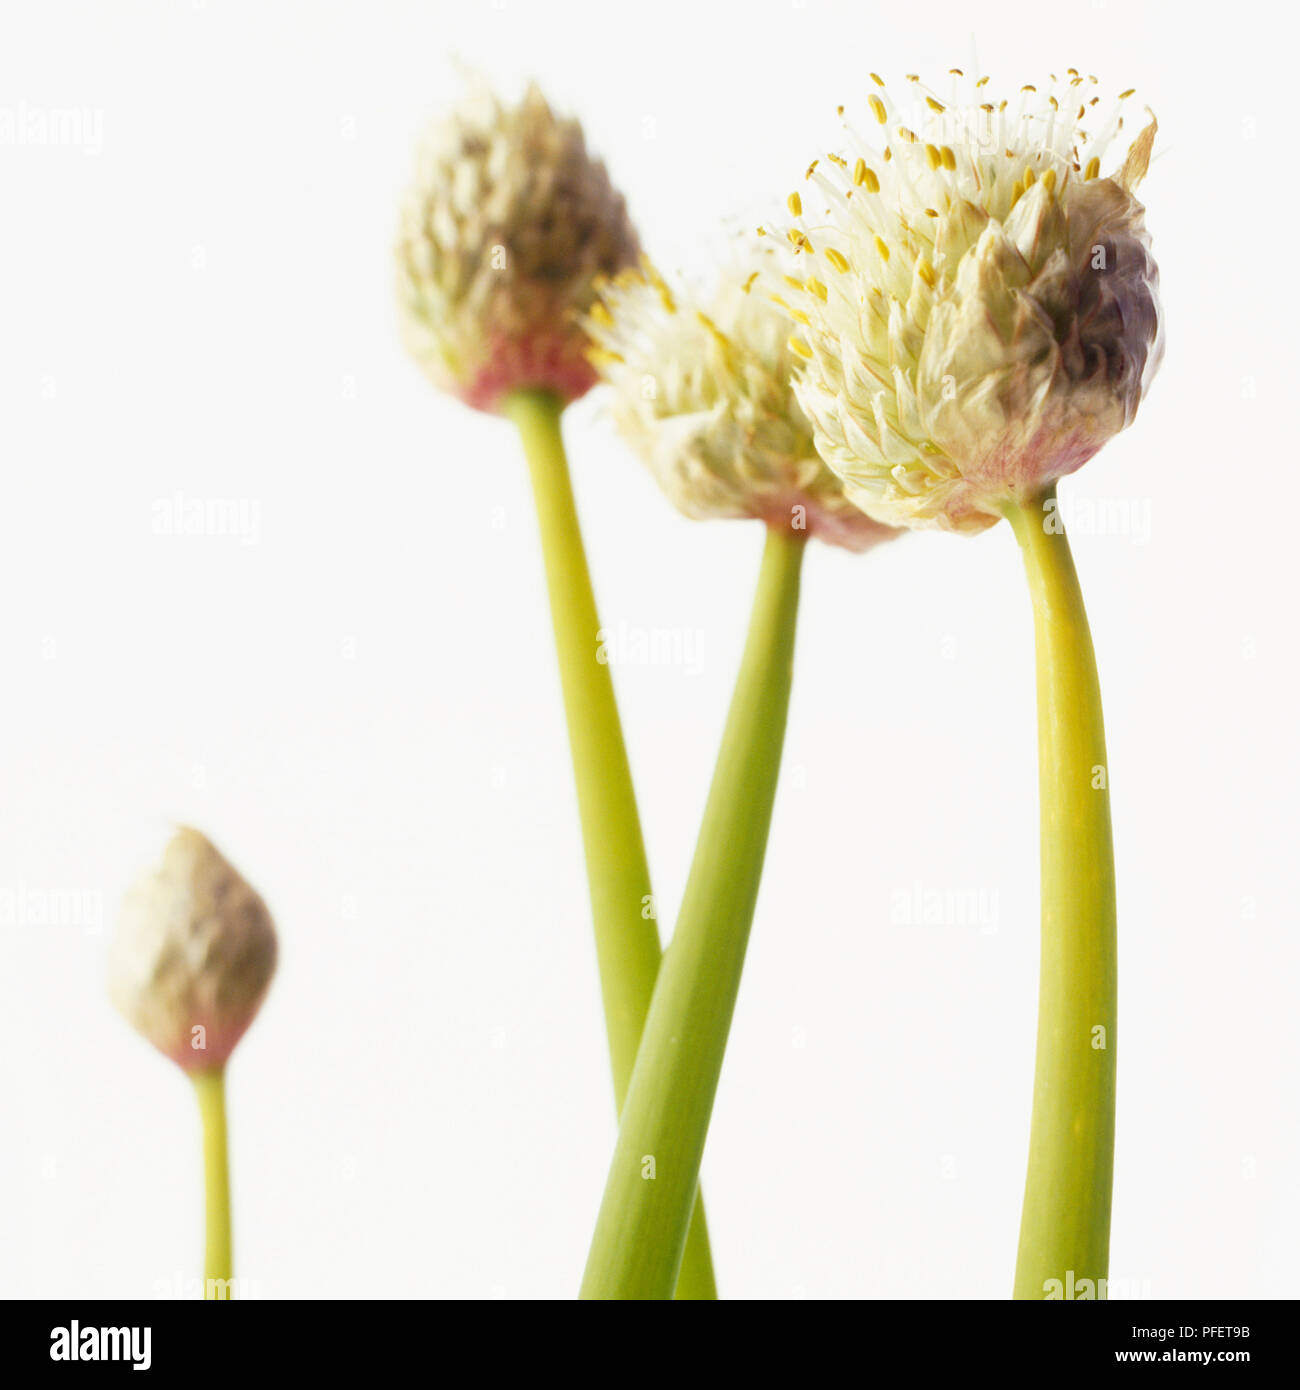 Welsh Onion, Japanese Leek (Allium fistulosum), focus on  large, creamy-white flower on long, hollow, and cylindrical stem Stock Photo